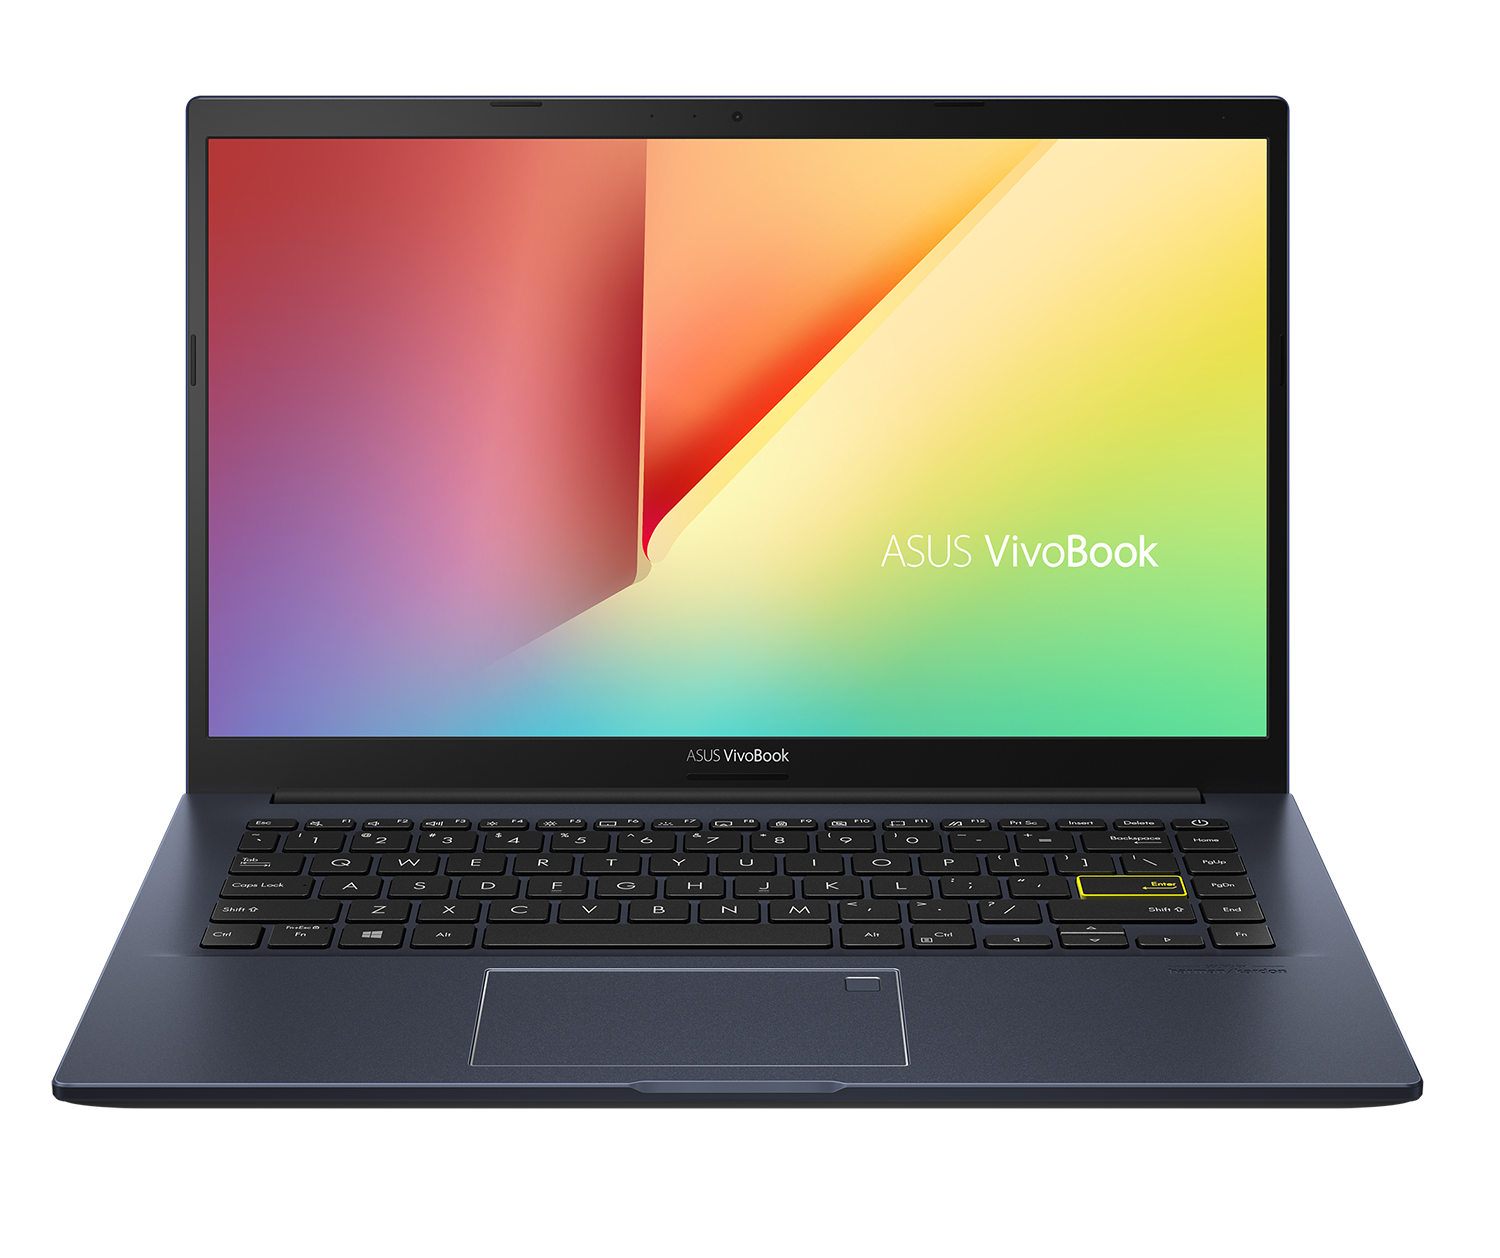 ASUS VivoBook 14 M413 Everyday Value Laptop (AMD Ryzen 5 3500U 4-Core, 8GB RAM, 1TB PCIe SSD, 14.0" Full HD (1920x1080), AMD Vega 8, Fingerprint, Wifi, Bluetooth, Win 10 Pro) (Used) - image 1 of 3